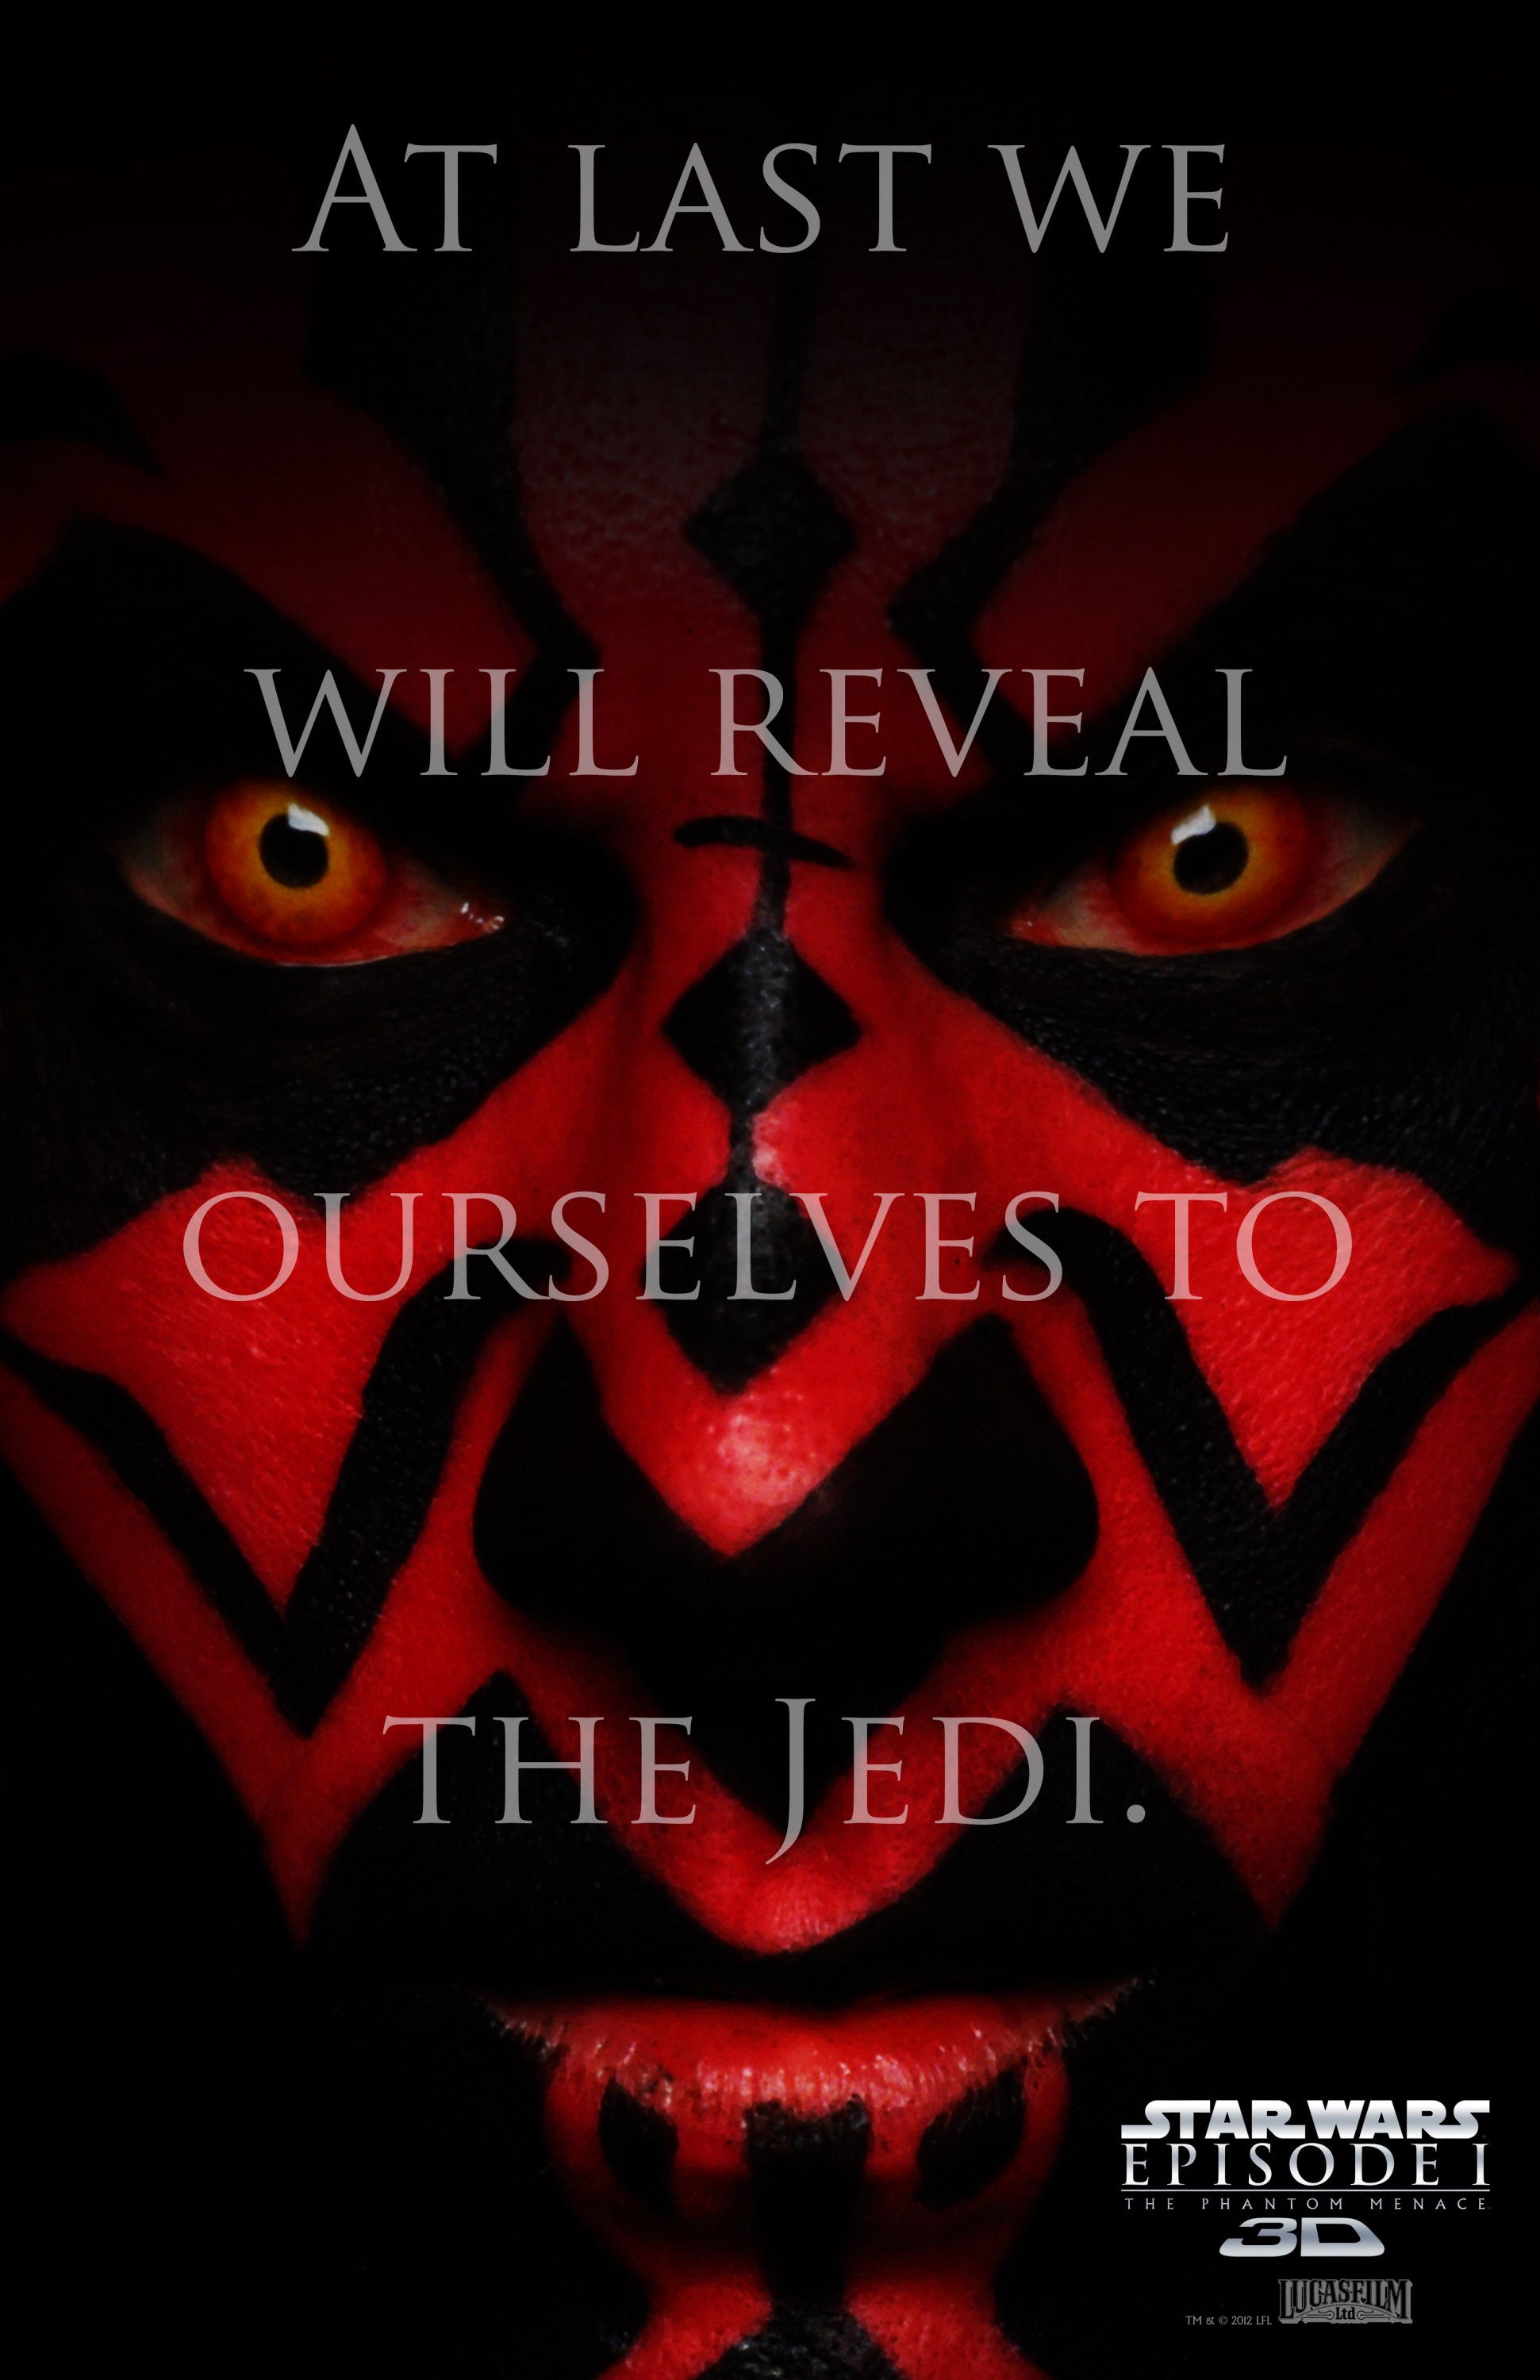 Mega Sized Movie Poster Image for Star Wars Episode 1: The Phantom Menace (#5 of 13)